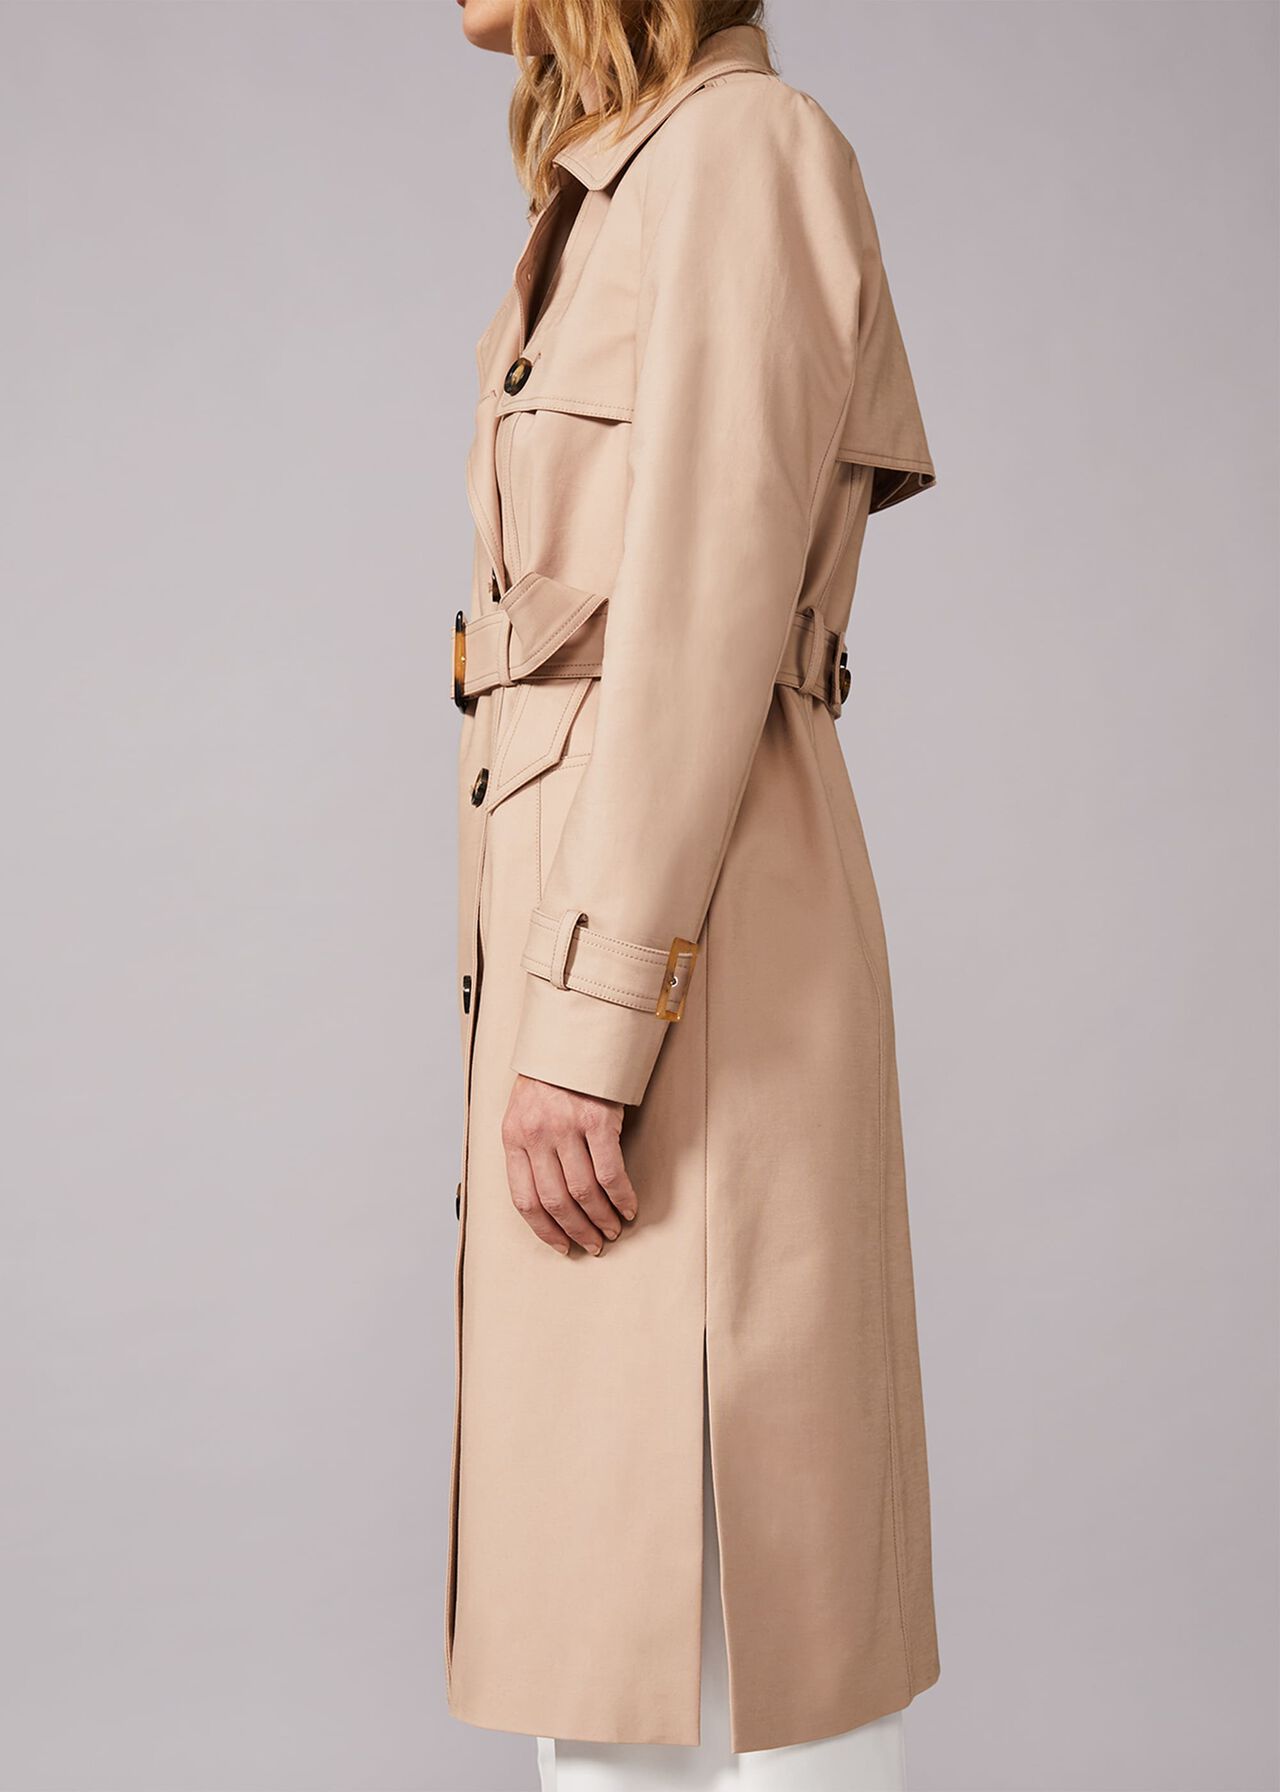 Lise Trench Coat